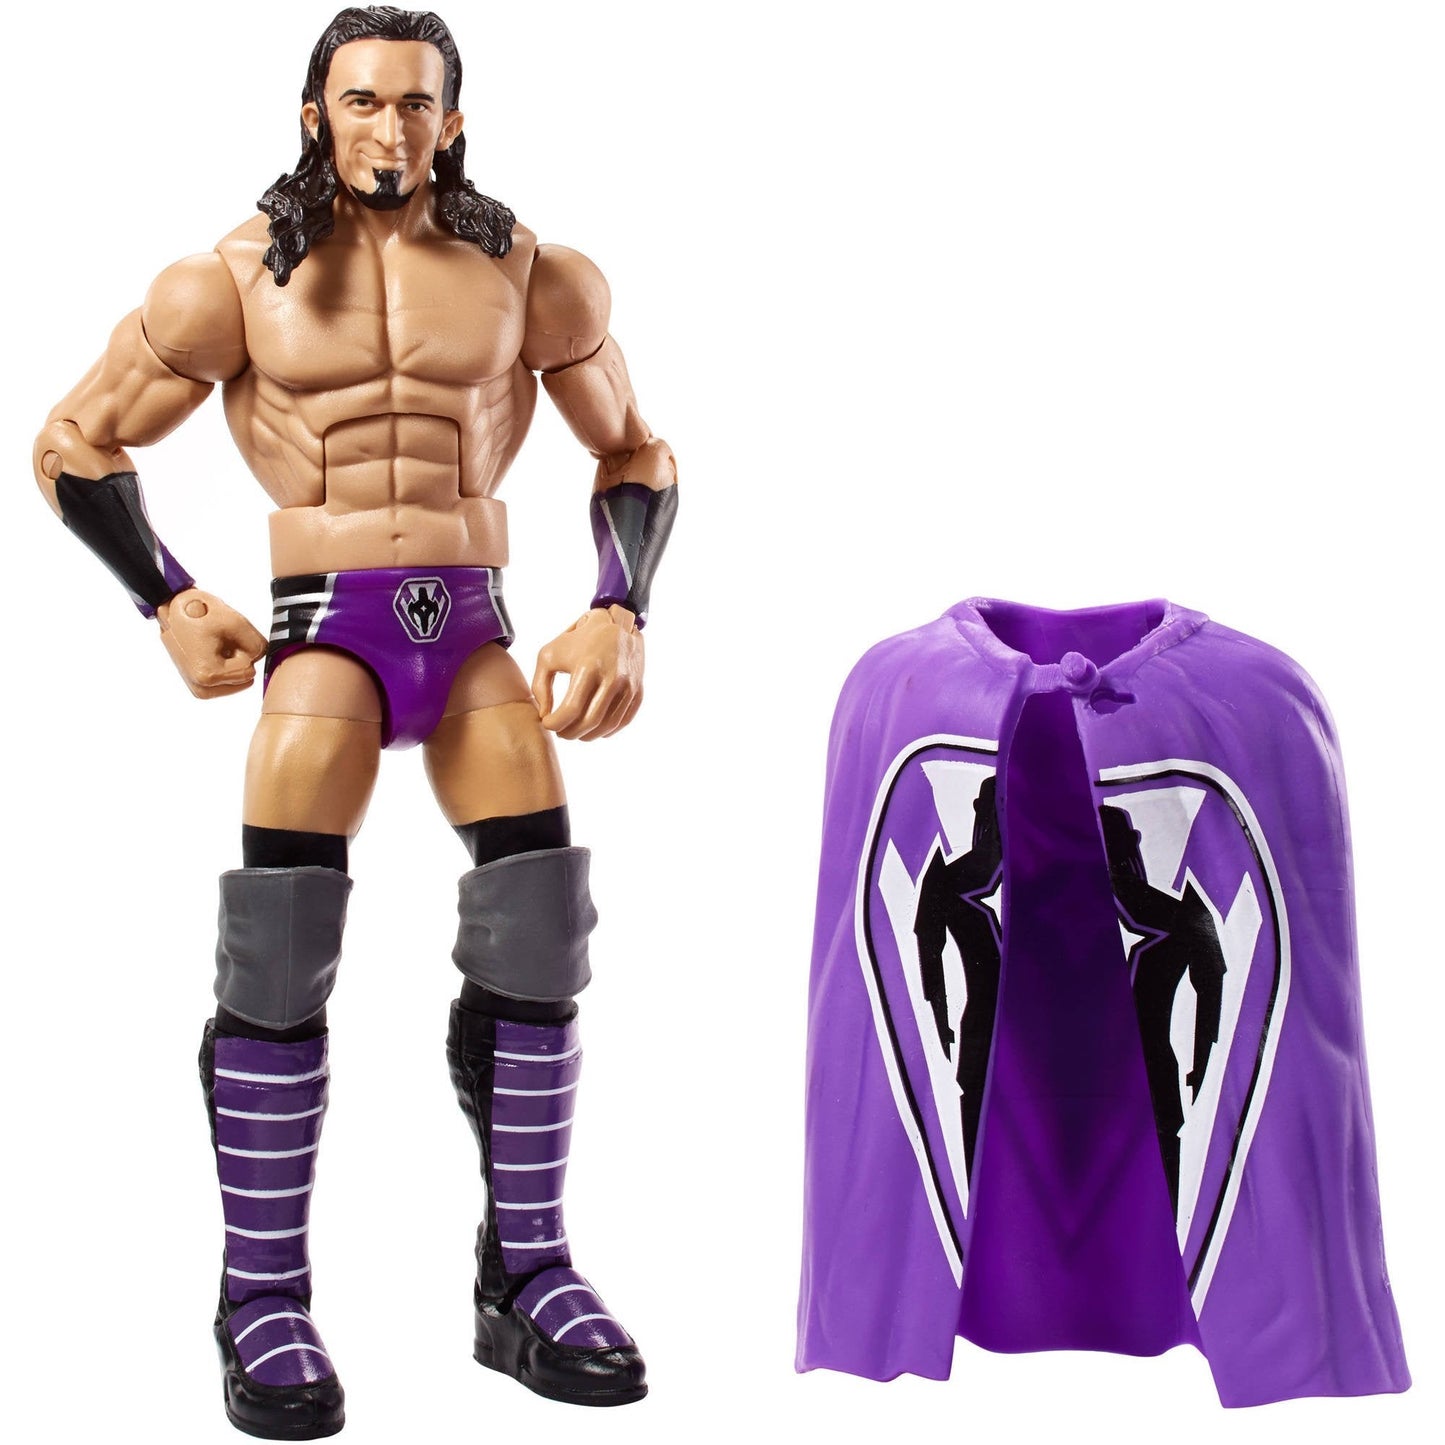 2016 WWE Mattel Elite Collection Series 42 Neville